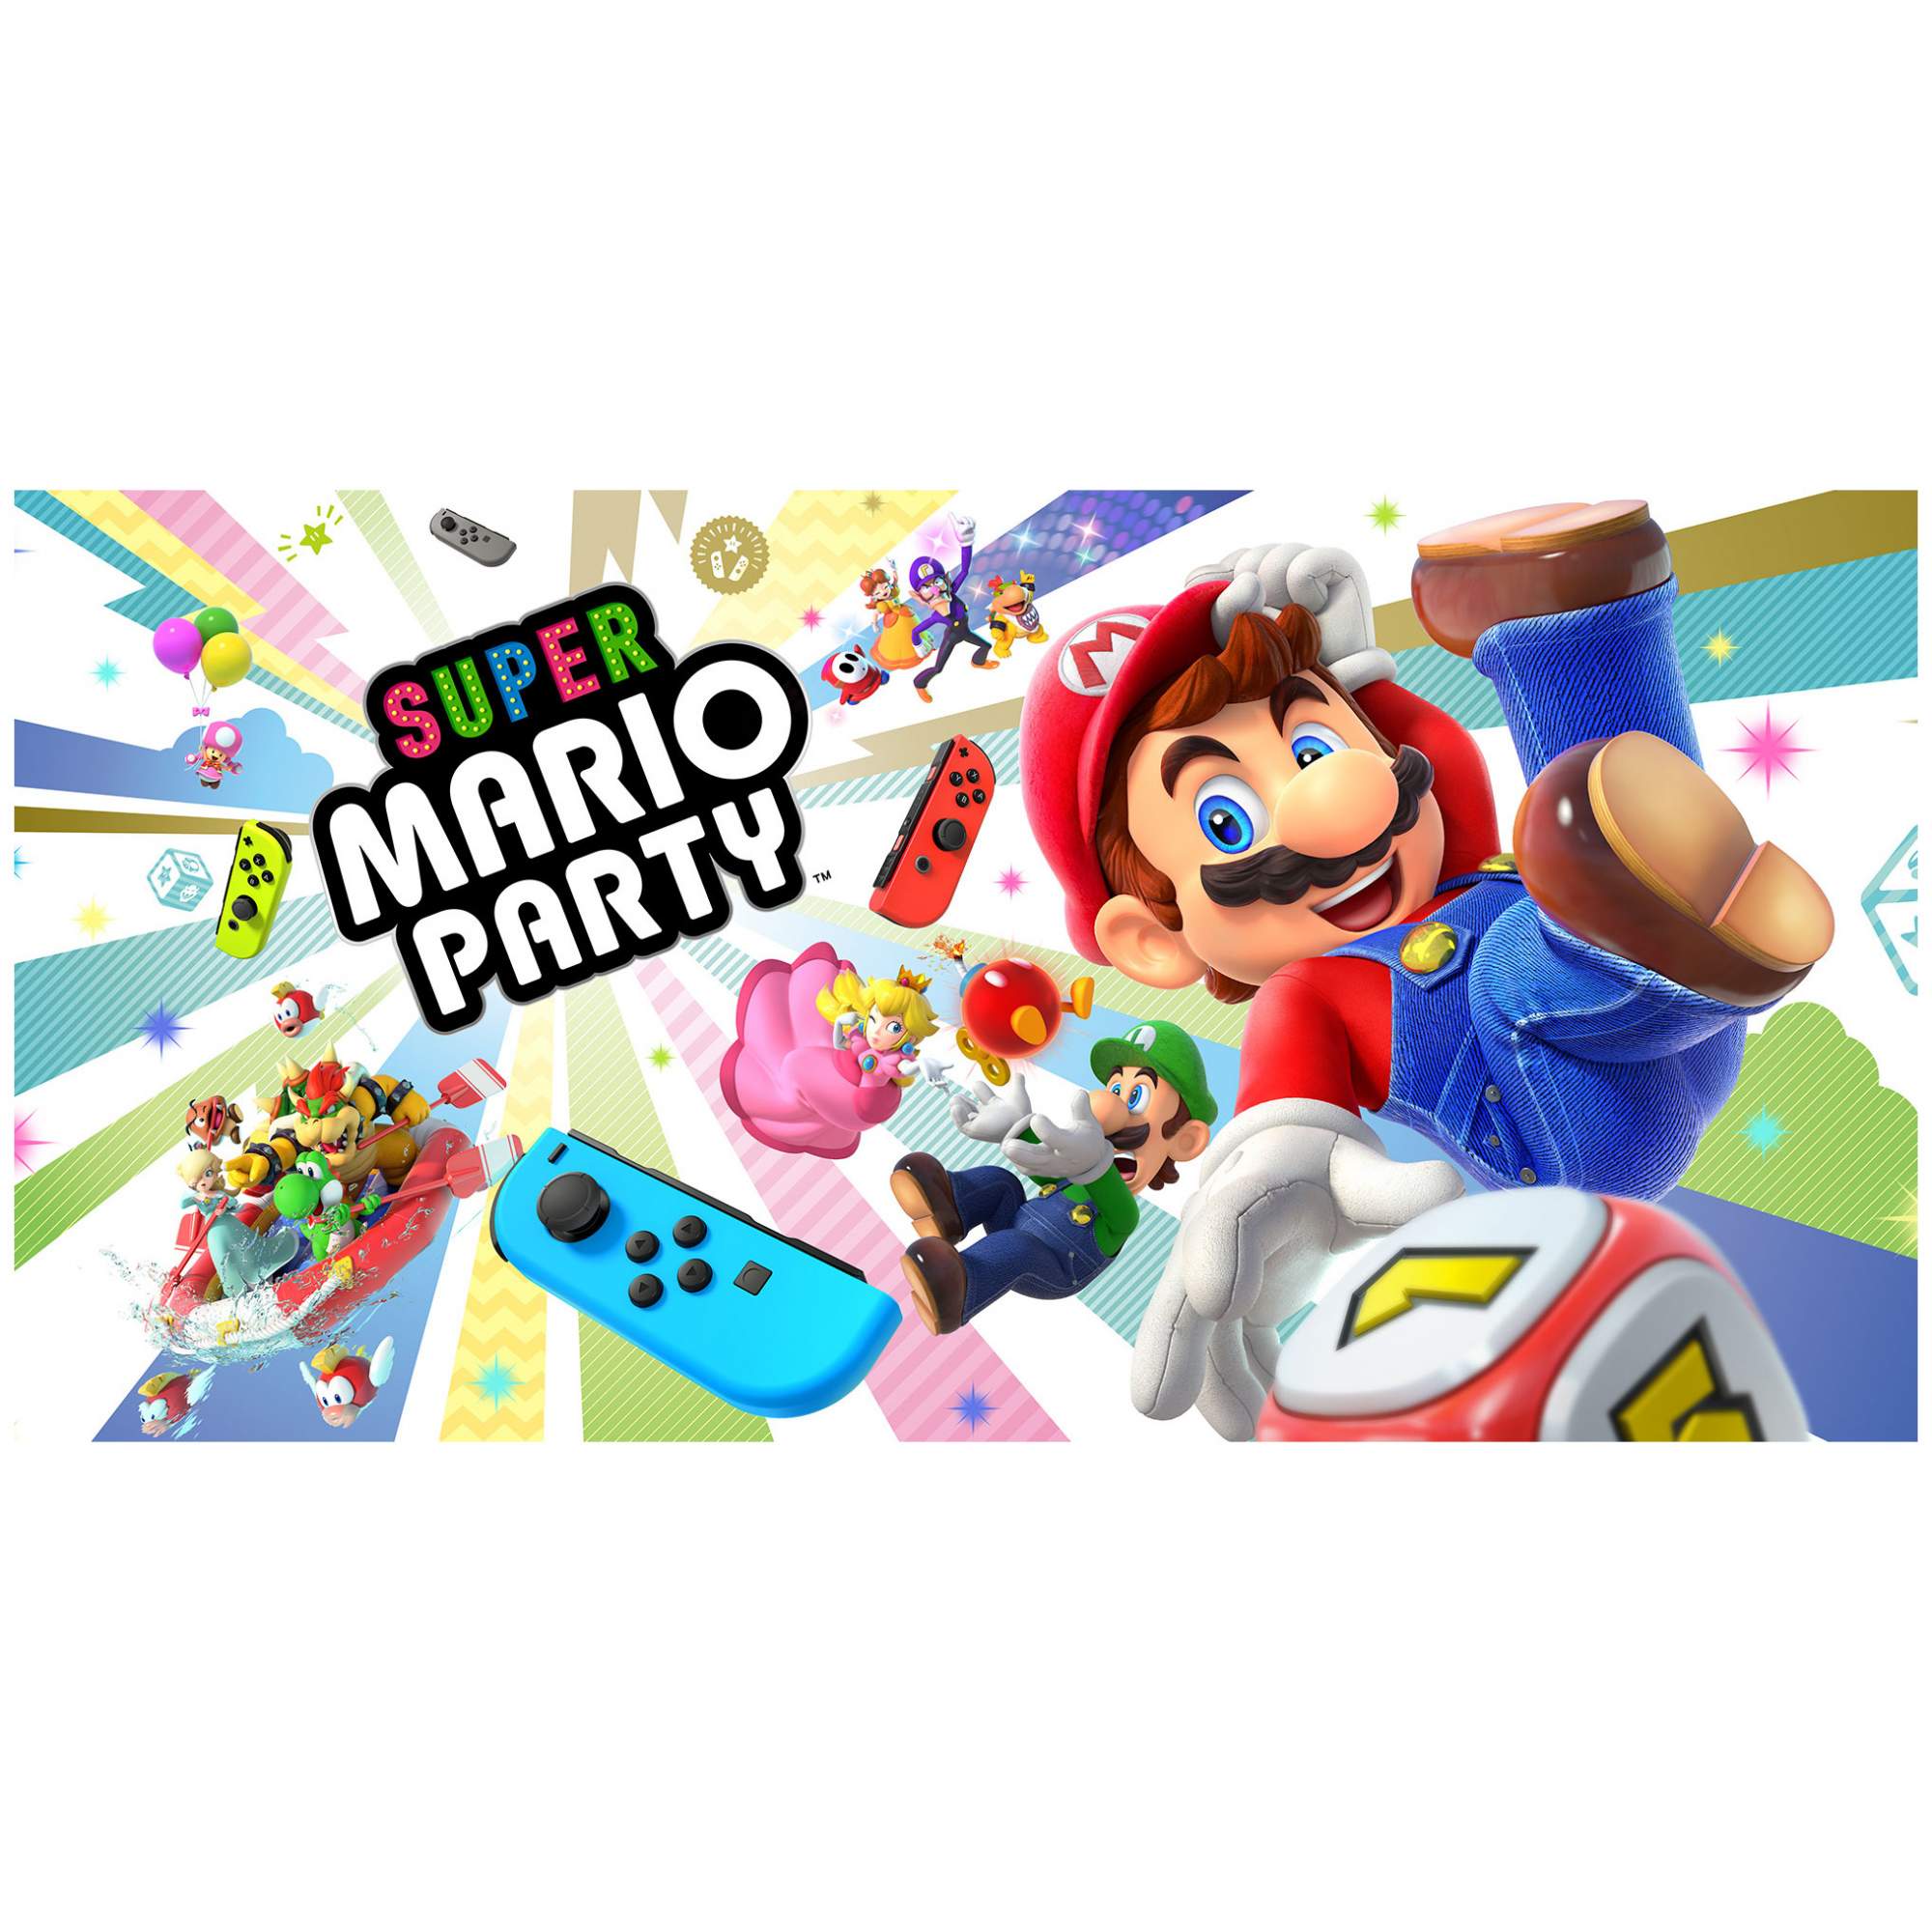 Mario bros nintendo switch. Nintendo Switch Марио пати. Mario Party 10 Nintendo Switch. Супер Марио пати на Нинтендо свитч. Nintendo Switch Nintendo Mario Party Superstars.